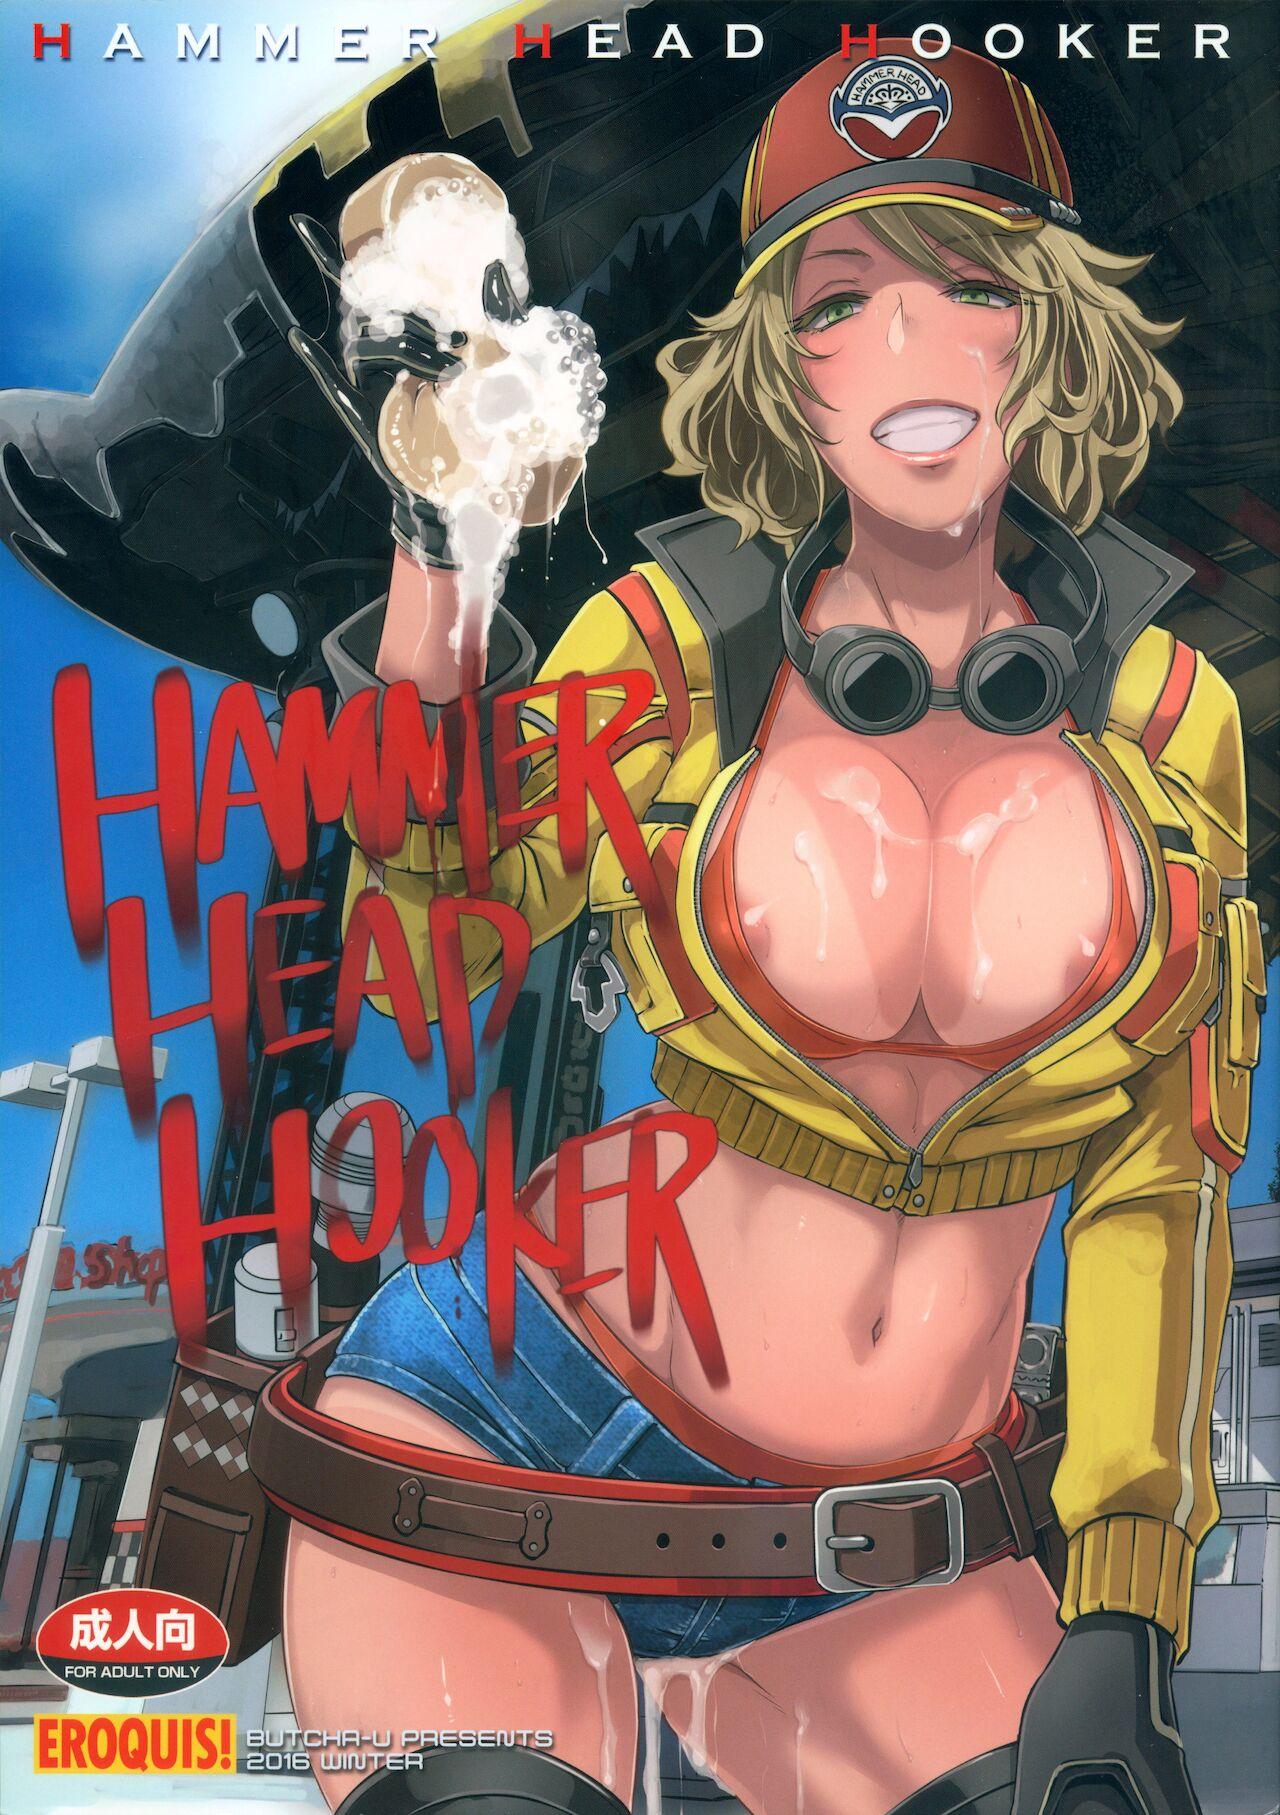 Cojiendo Hammer Head Hooker - Final fantasy xv Turkish - Picture 1